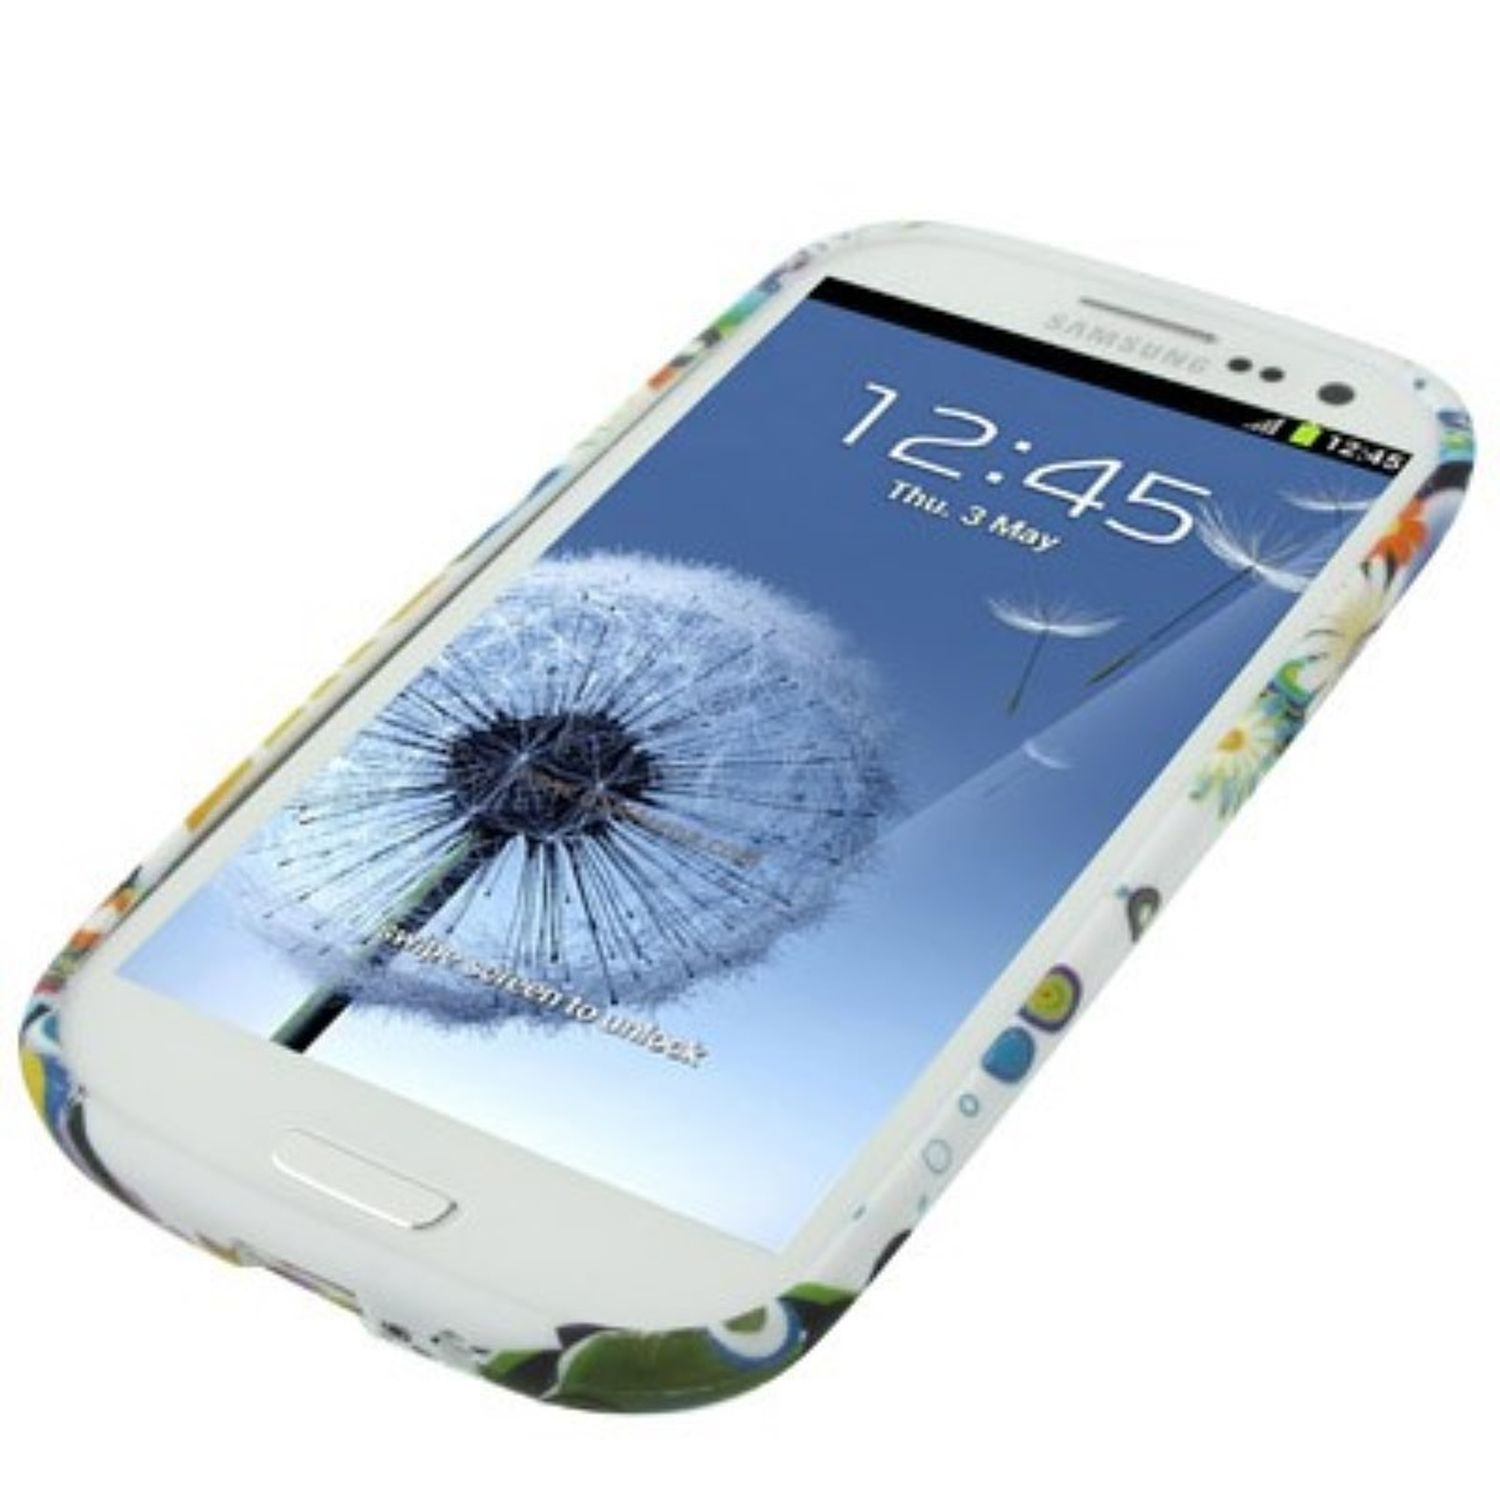 S3 KÖNIG Backcover, Schutzhülle, Galaxy DESIGN S3 Mehrfarbig Samsung, / NEO,